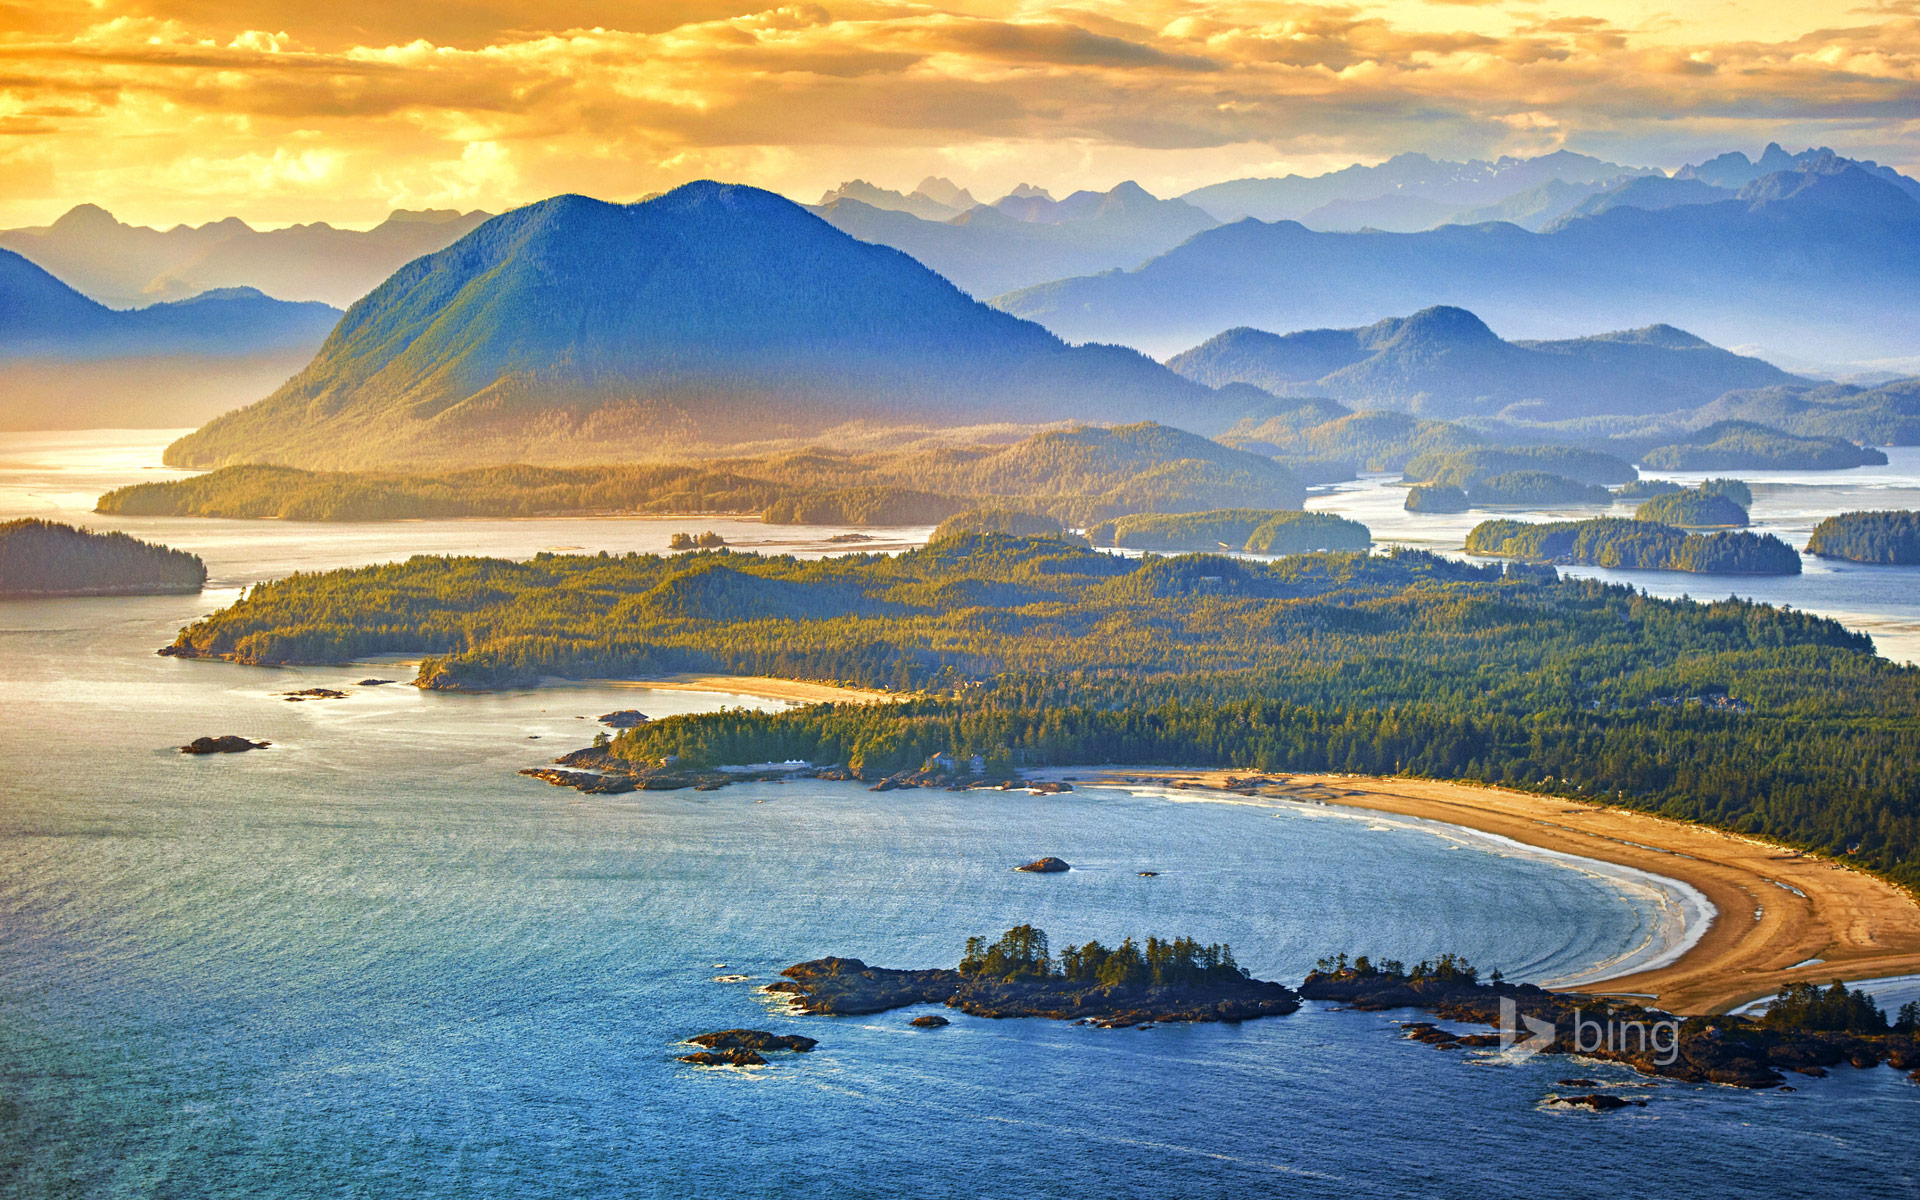 Located on the coast of the. Британская Колумбия остров Ванкувер. Остров Ванкувер Тофино. Биолюминесценция остров Ванкувер Канада. Tofino, остров Ванкувер, Канада.